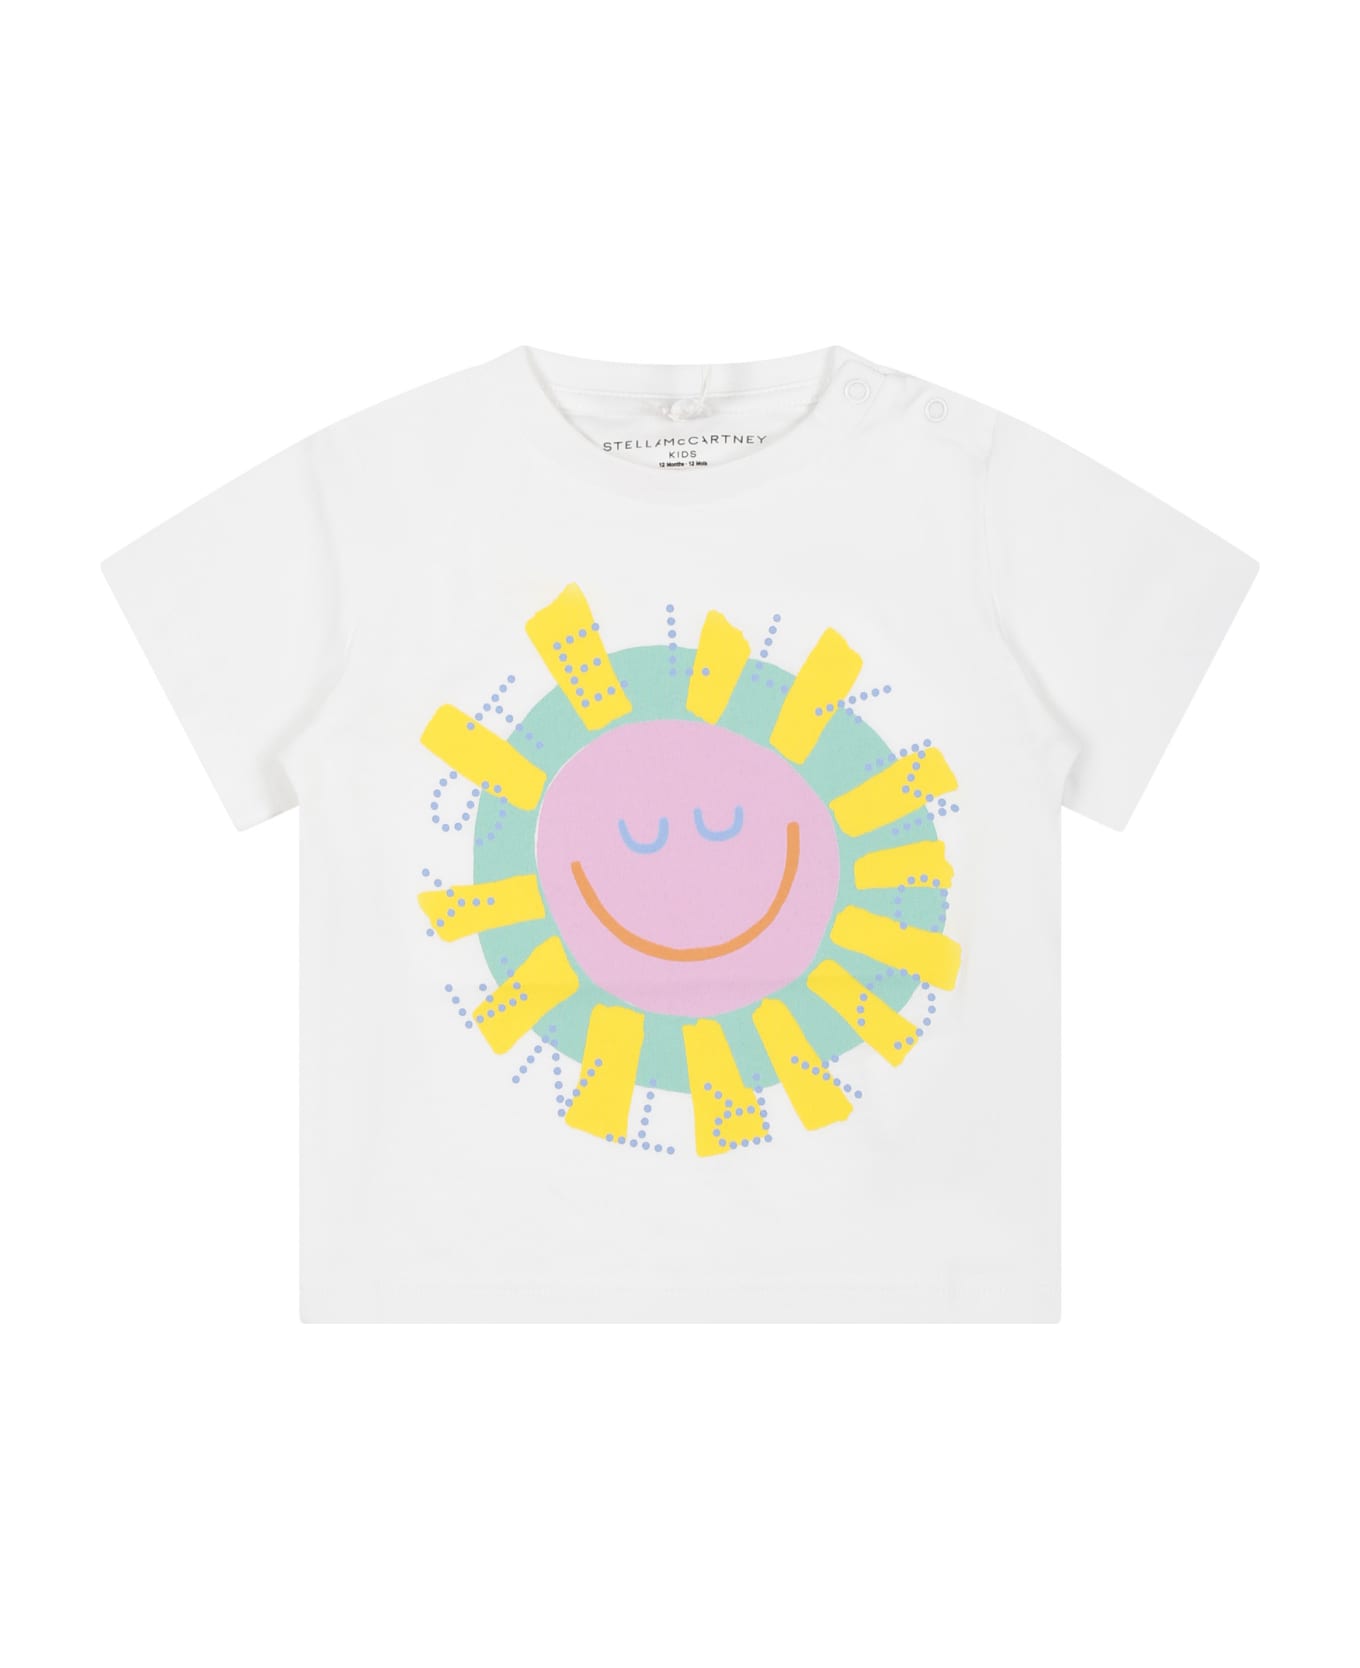 Stella McCartney Kids White T-shirt For Baby Girl With Multicolor Sun Print - White